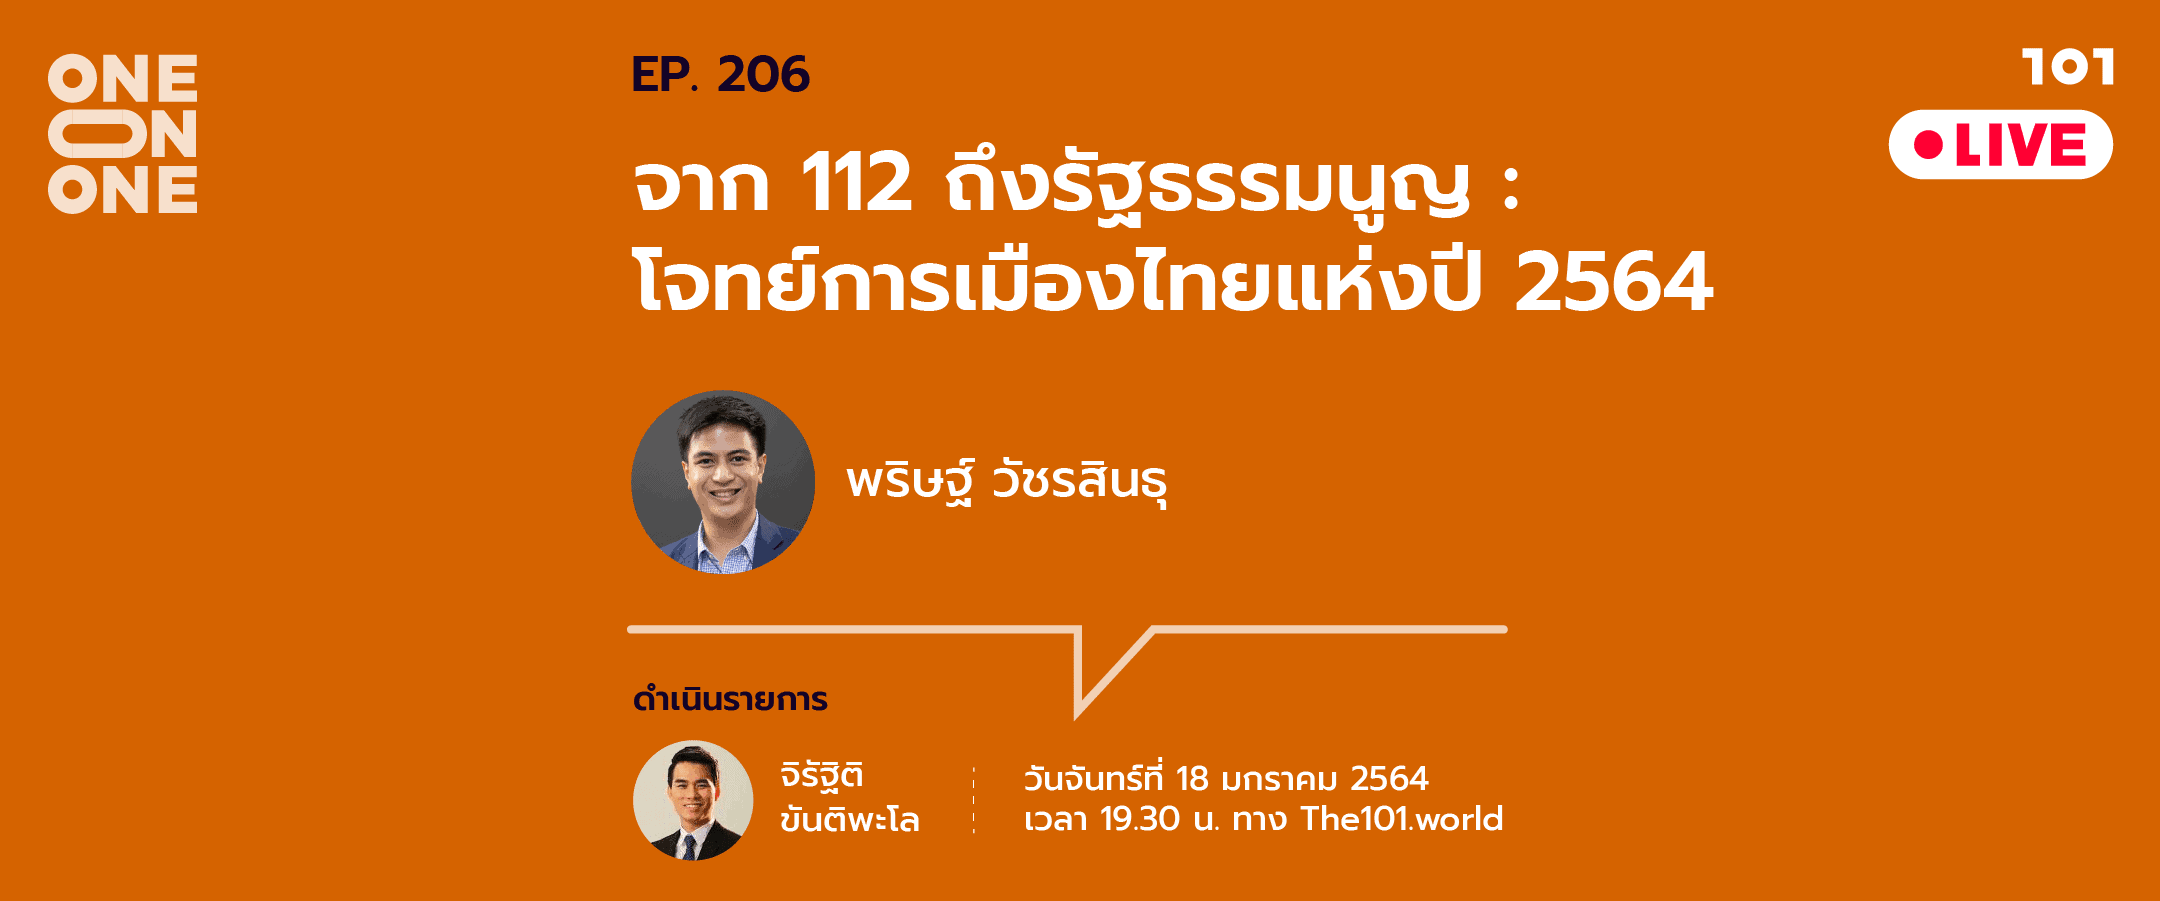 101 One-on-One Ep.206 “จาก ม.112 ถึงรัฐธรรมนูญ : โจทย์การเมืองไทยแห่งปี 2564” กับ พริษฐ์ วัชรสินธุ